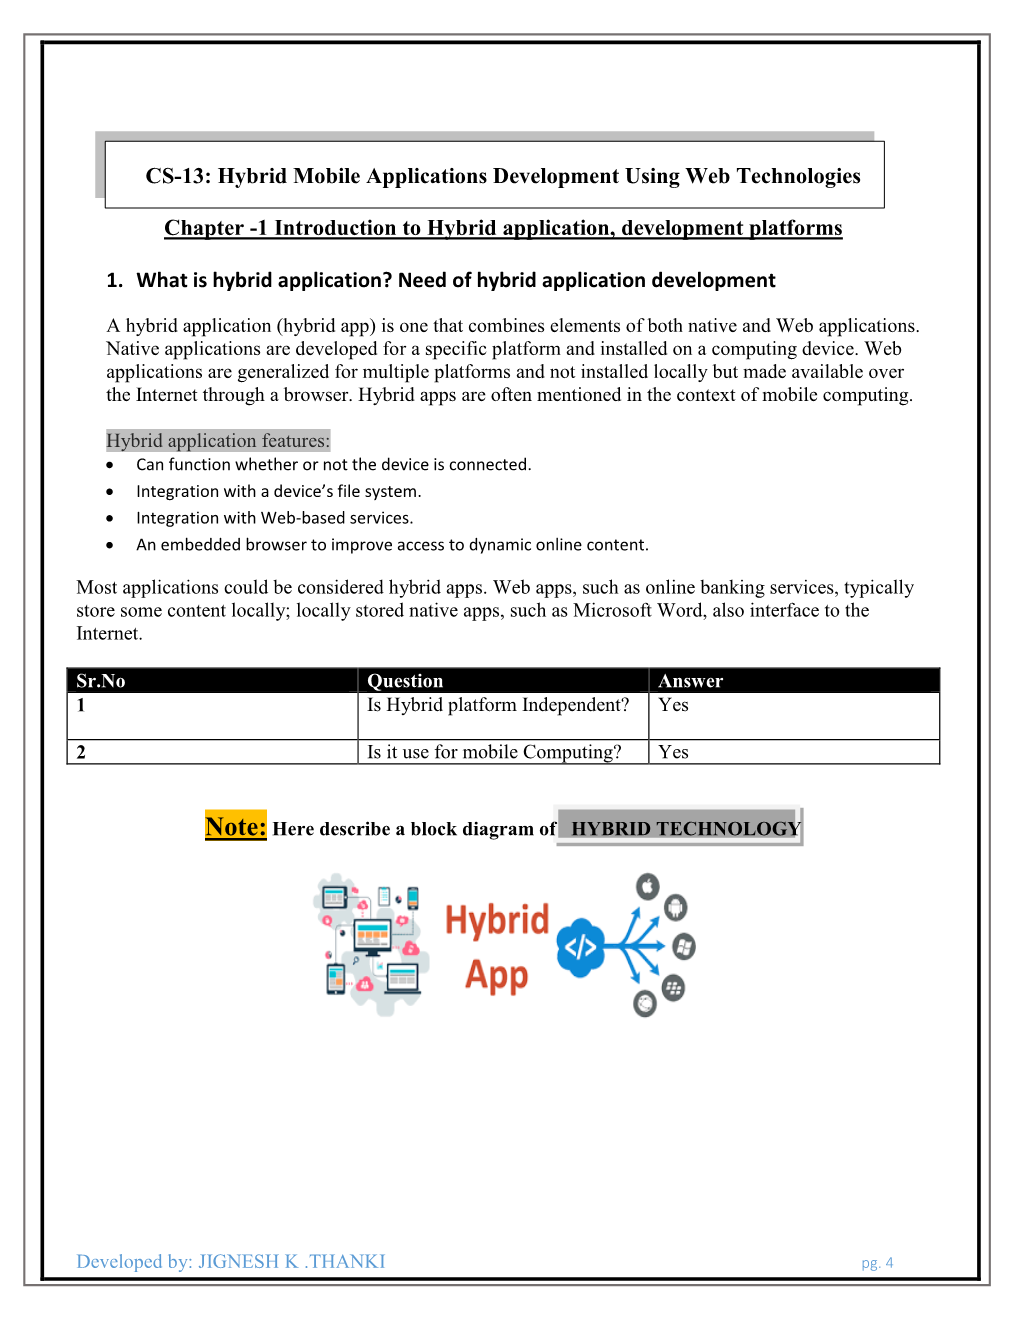 1 Introduction to Hybrid Application, Development Platforms